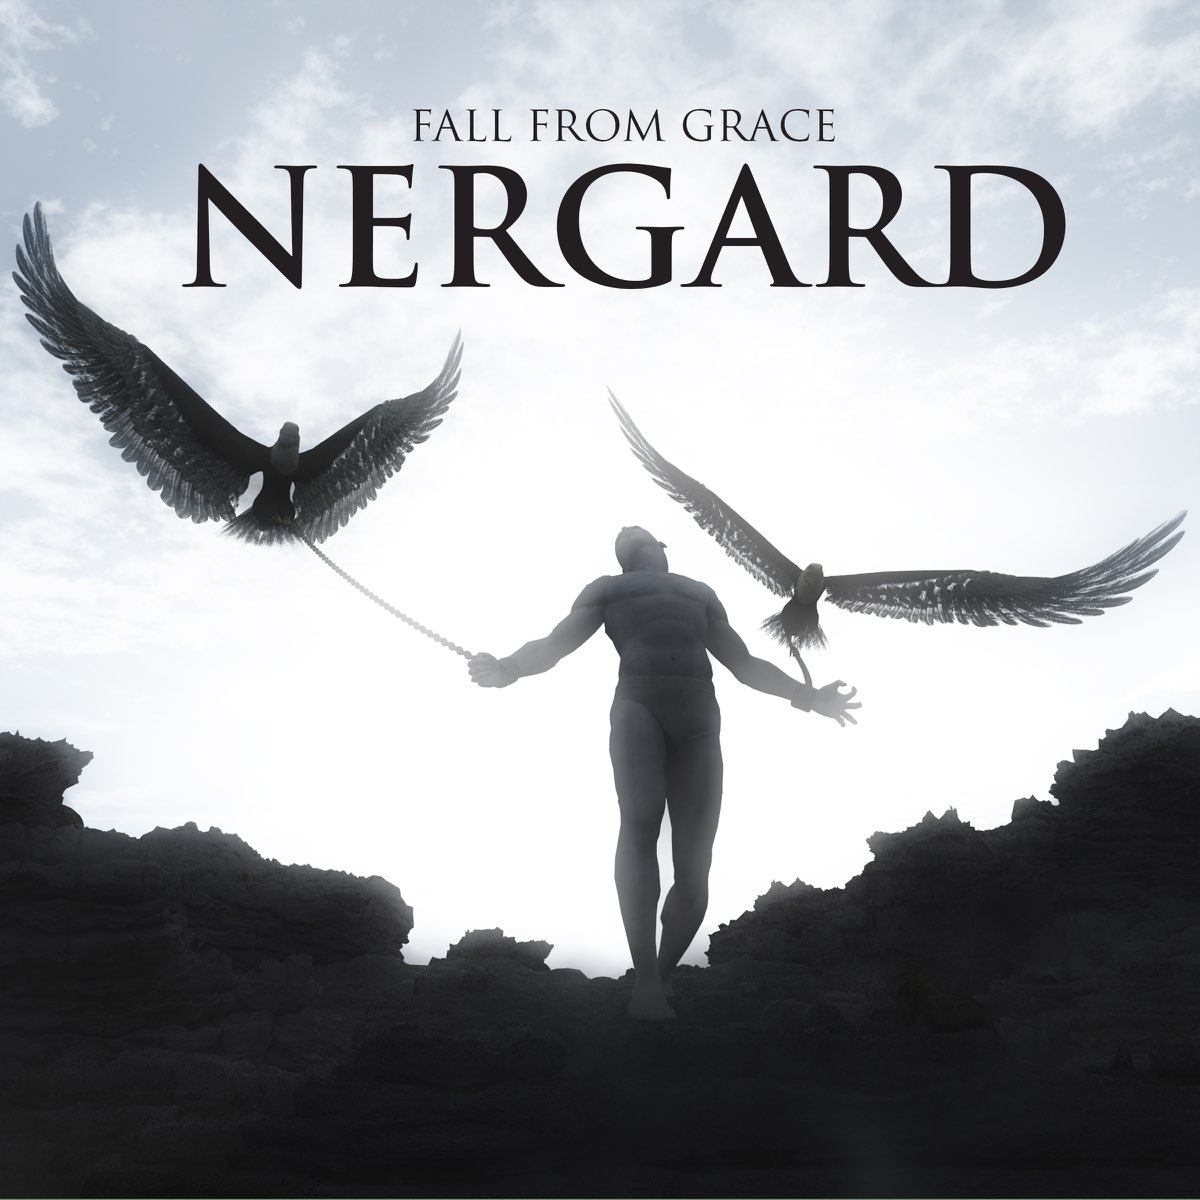 Nergard. Nergard Metal. Nergard a bit closer to Heaven.